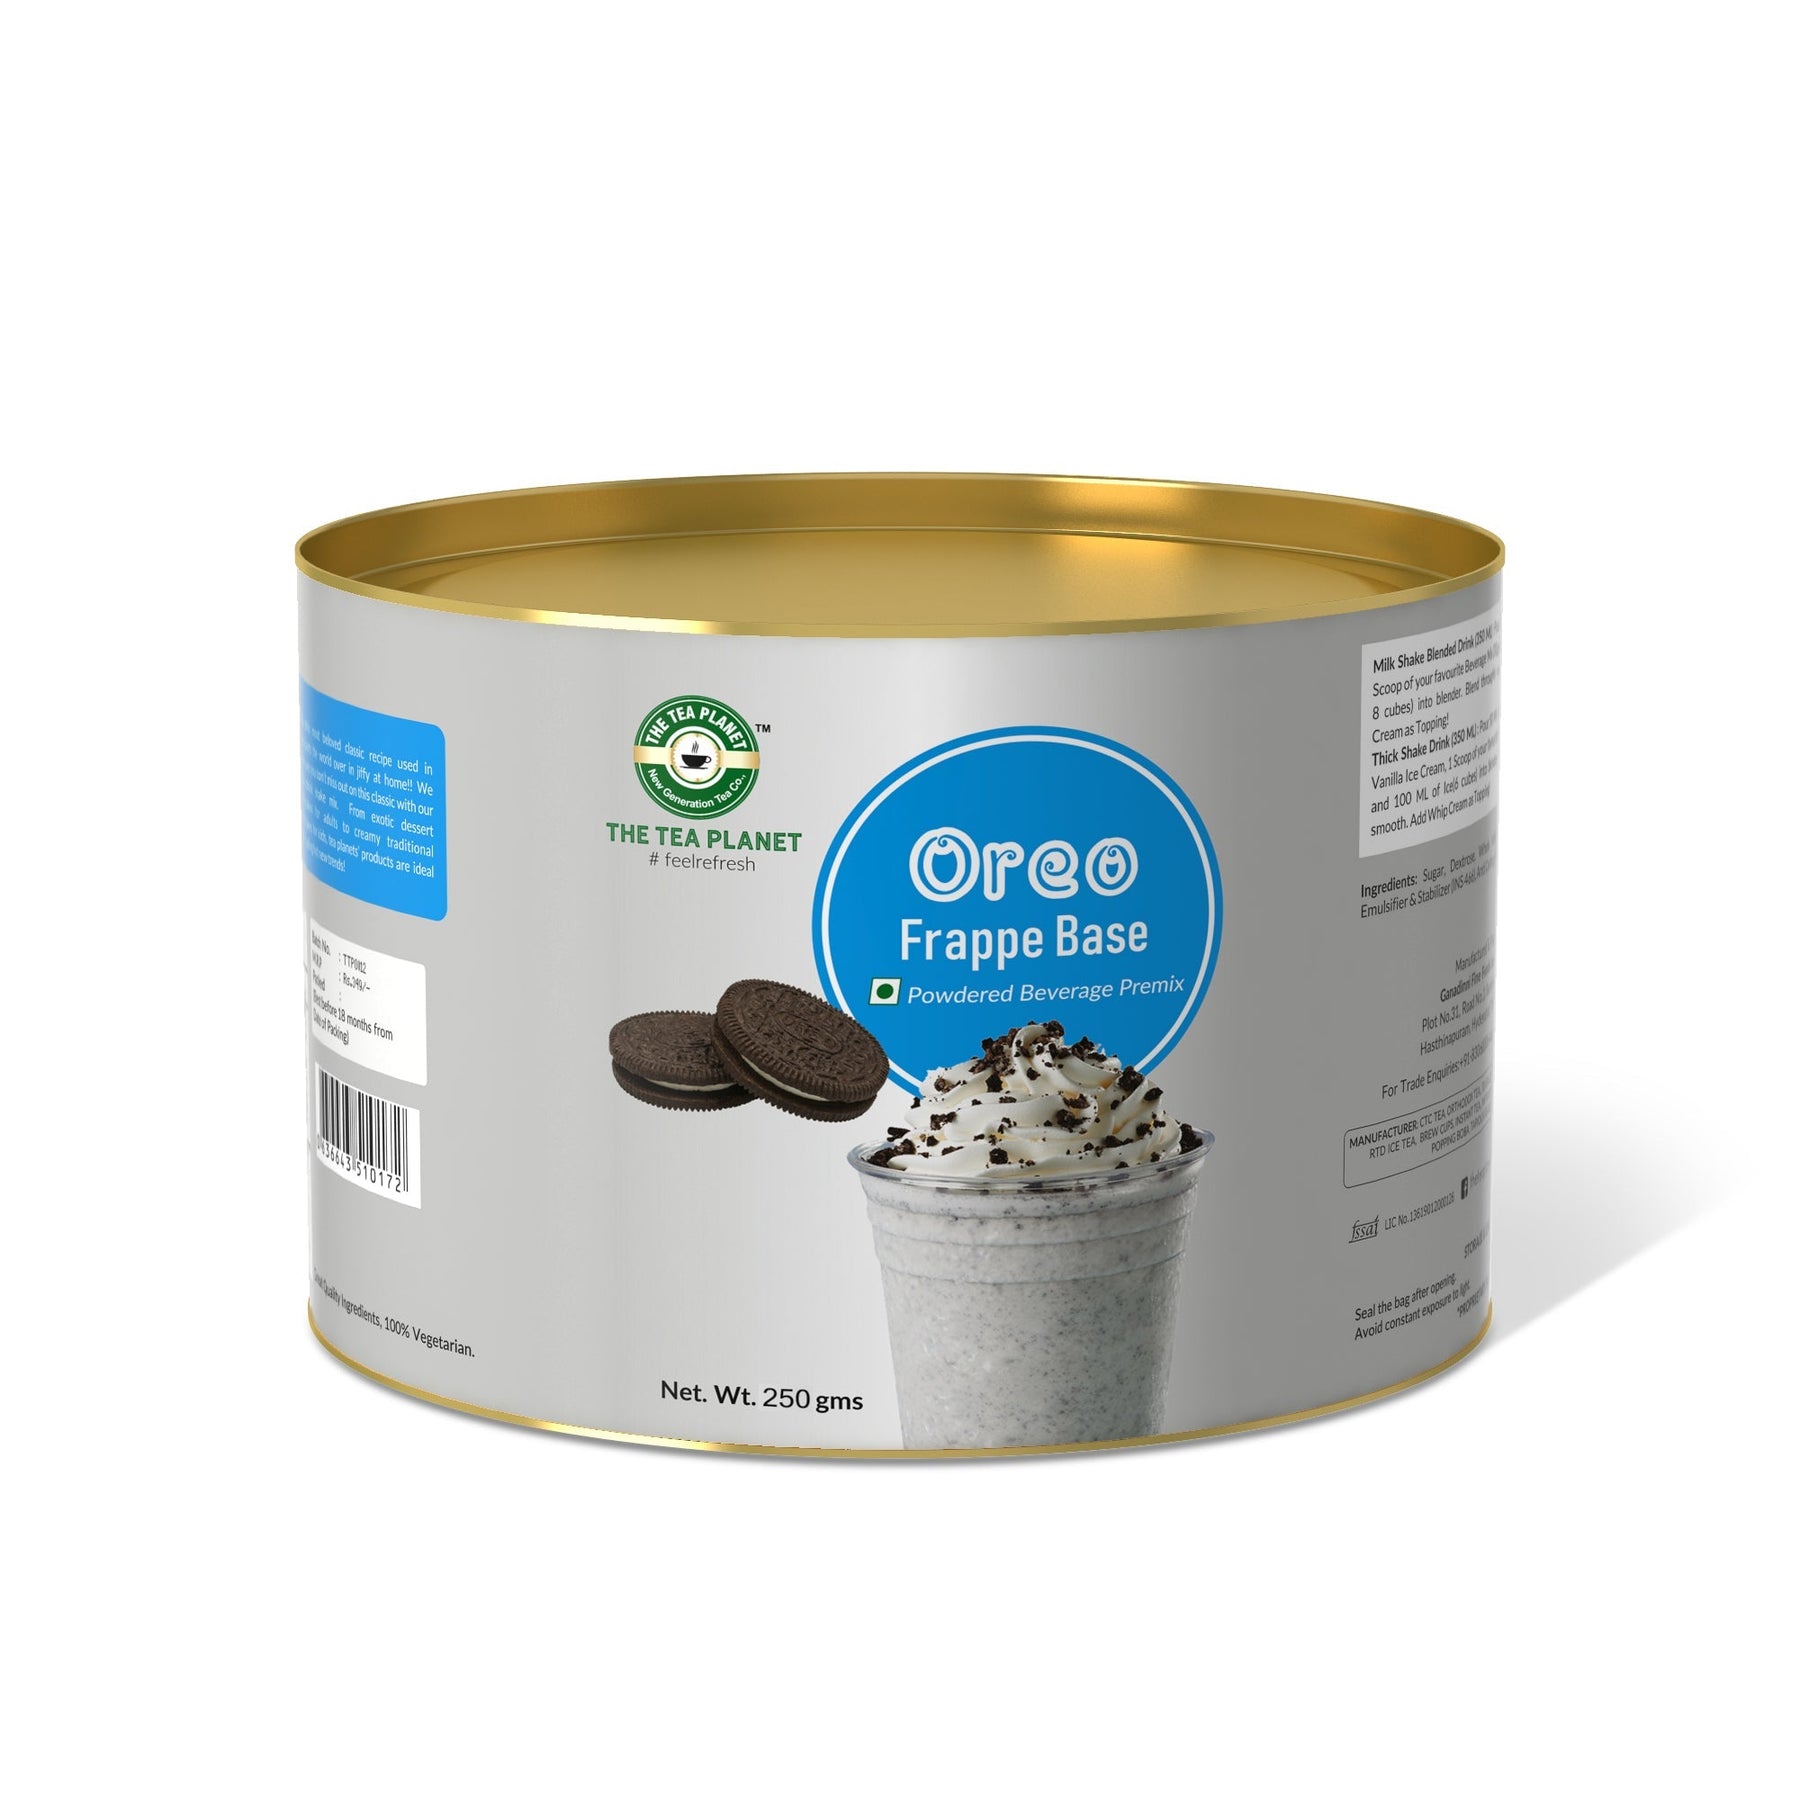 Oreo Frappe Base Milkshake Mix - 400 gms